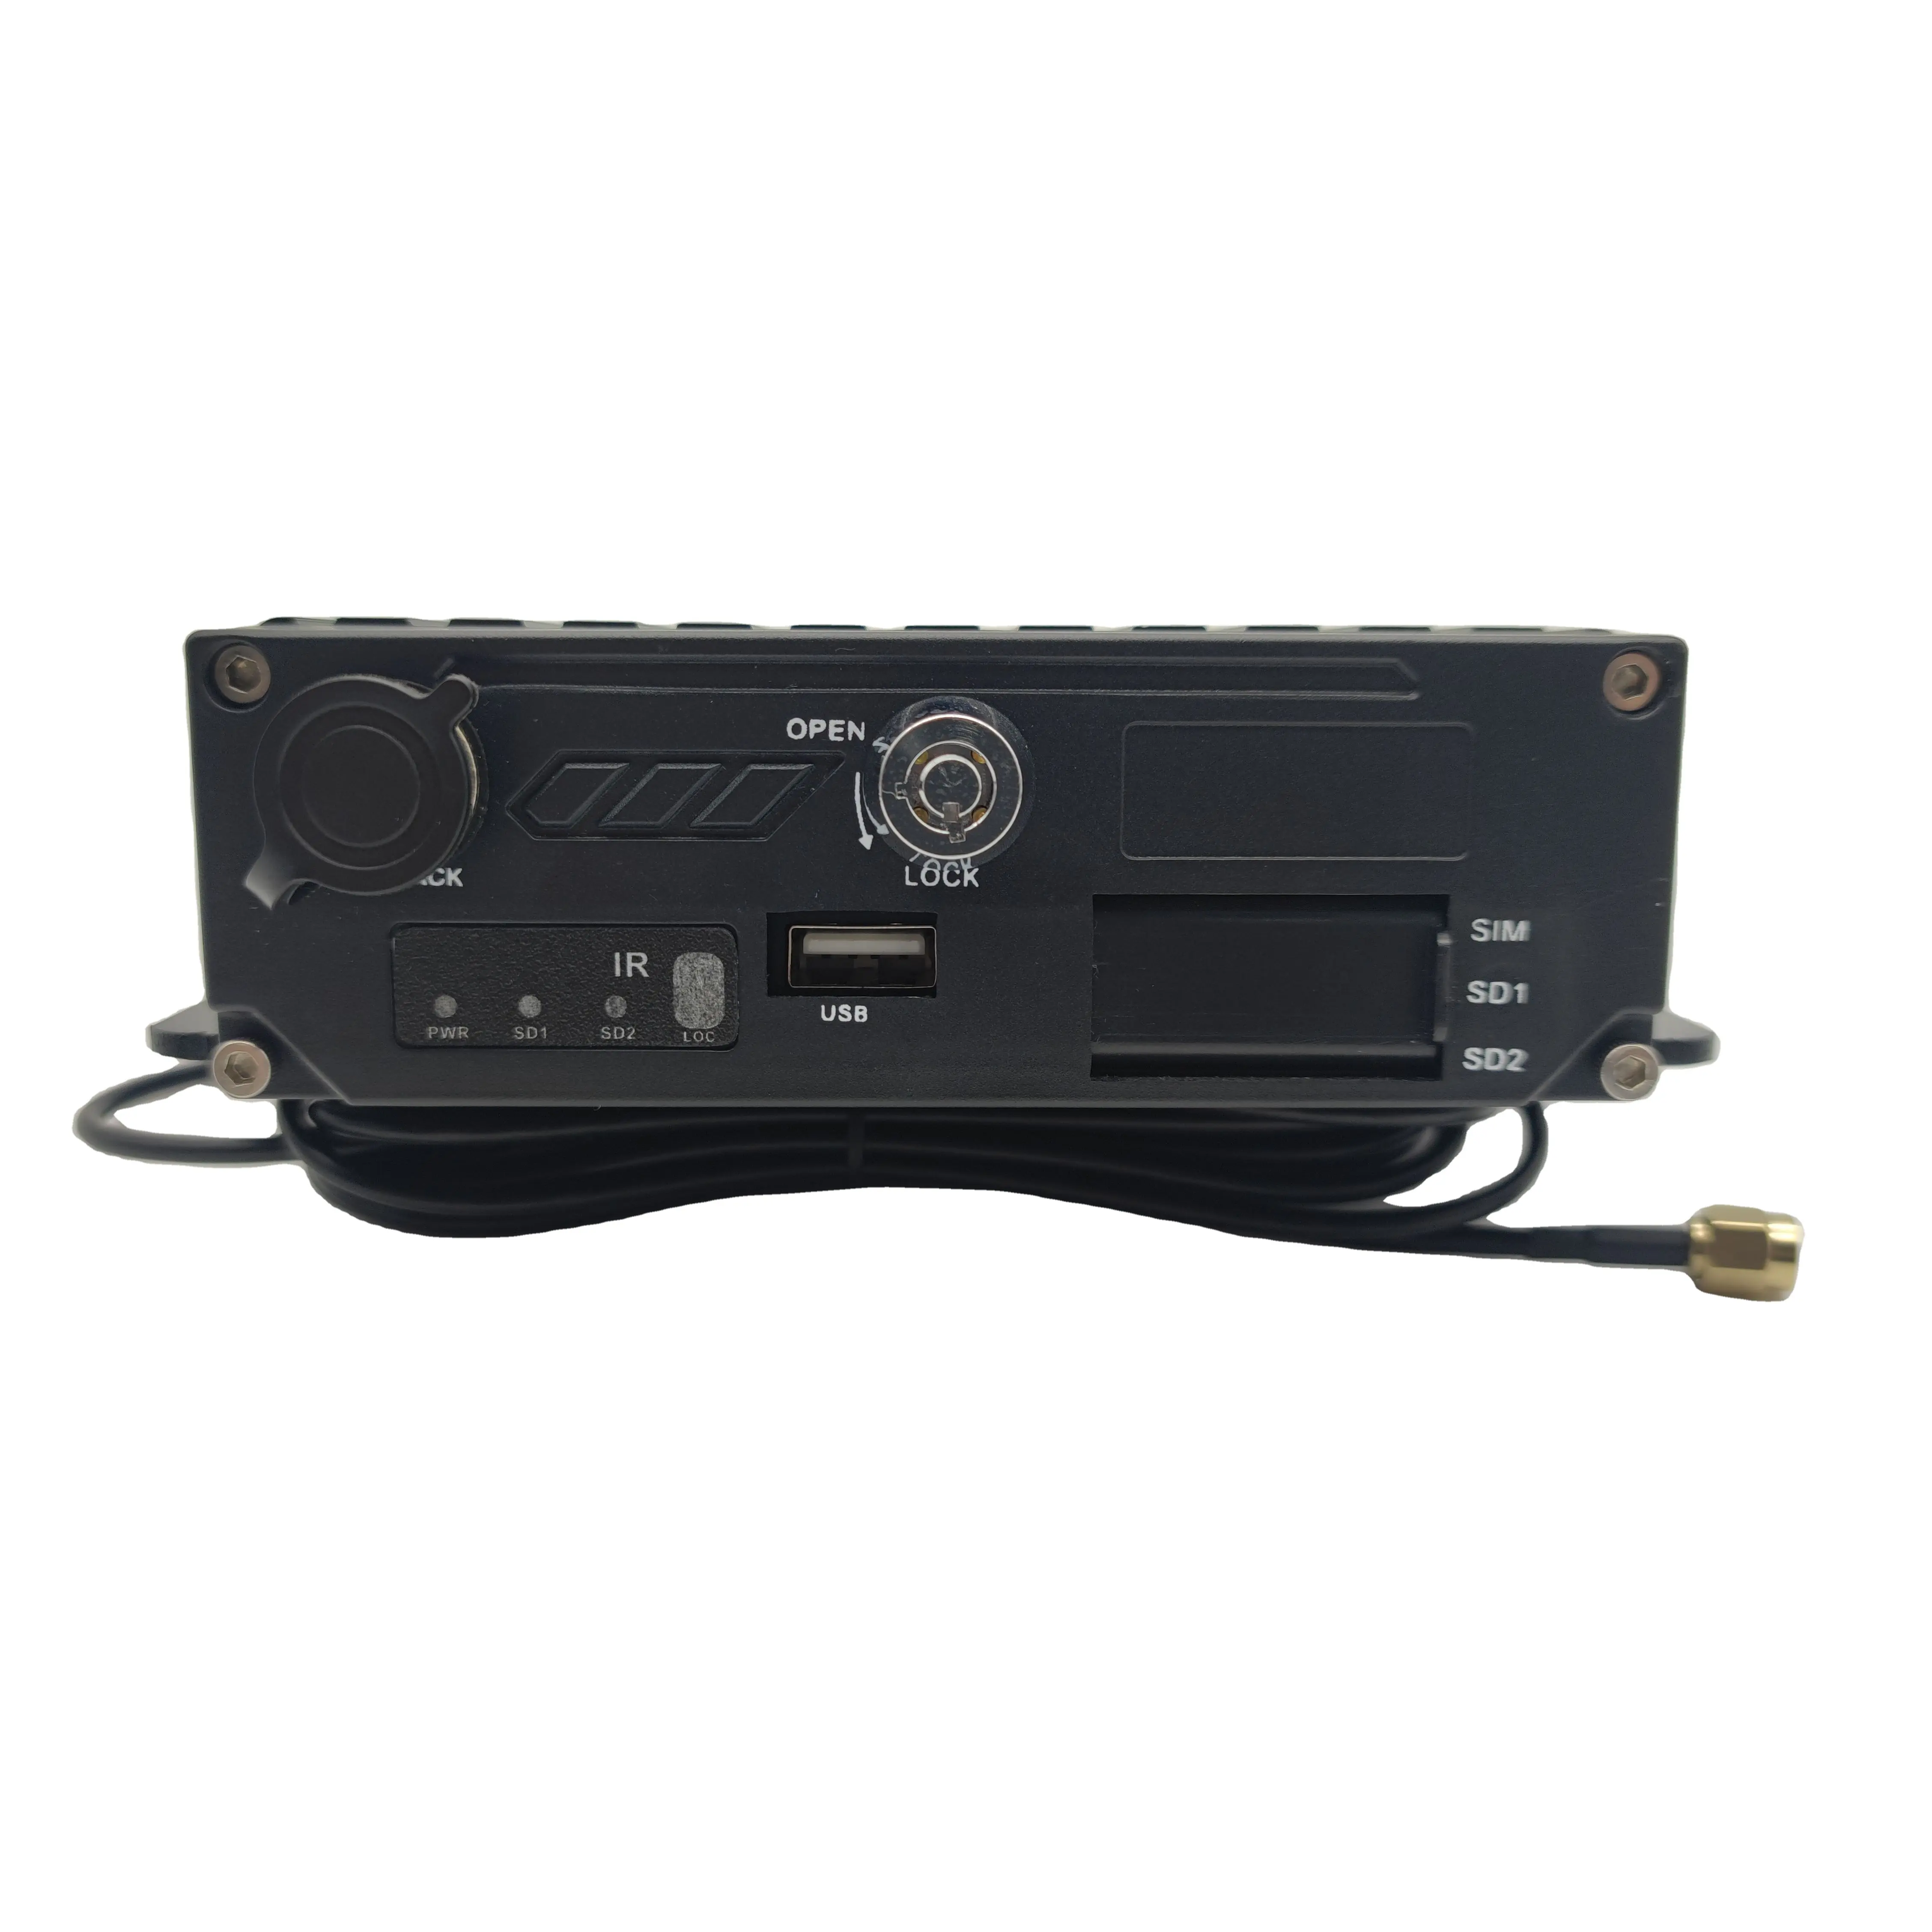 FL   OEM 8CH 1080P AHD DVR NVR XVR Hybrid Video Recorder 8CH For Analog AHD TVI CVI Camera HD CCTV Surveillance Security DVR